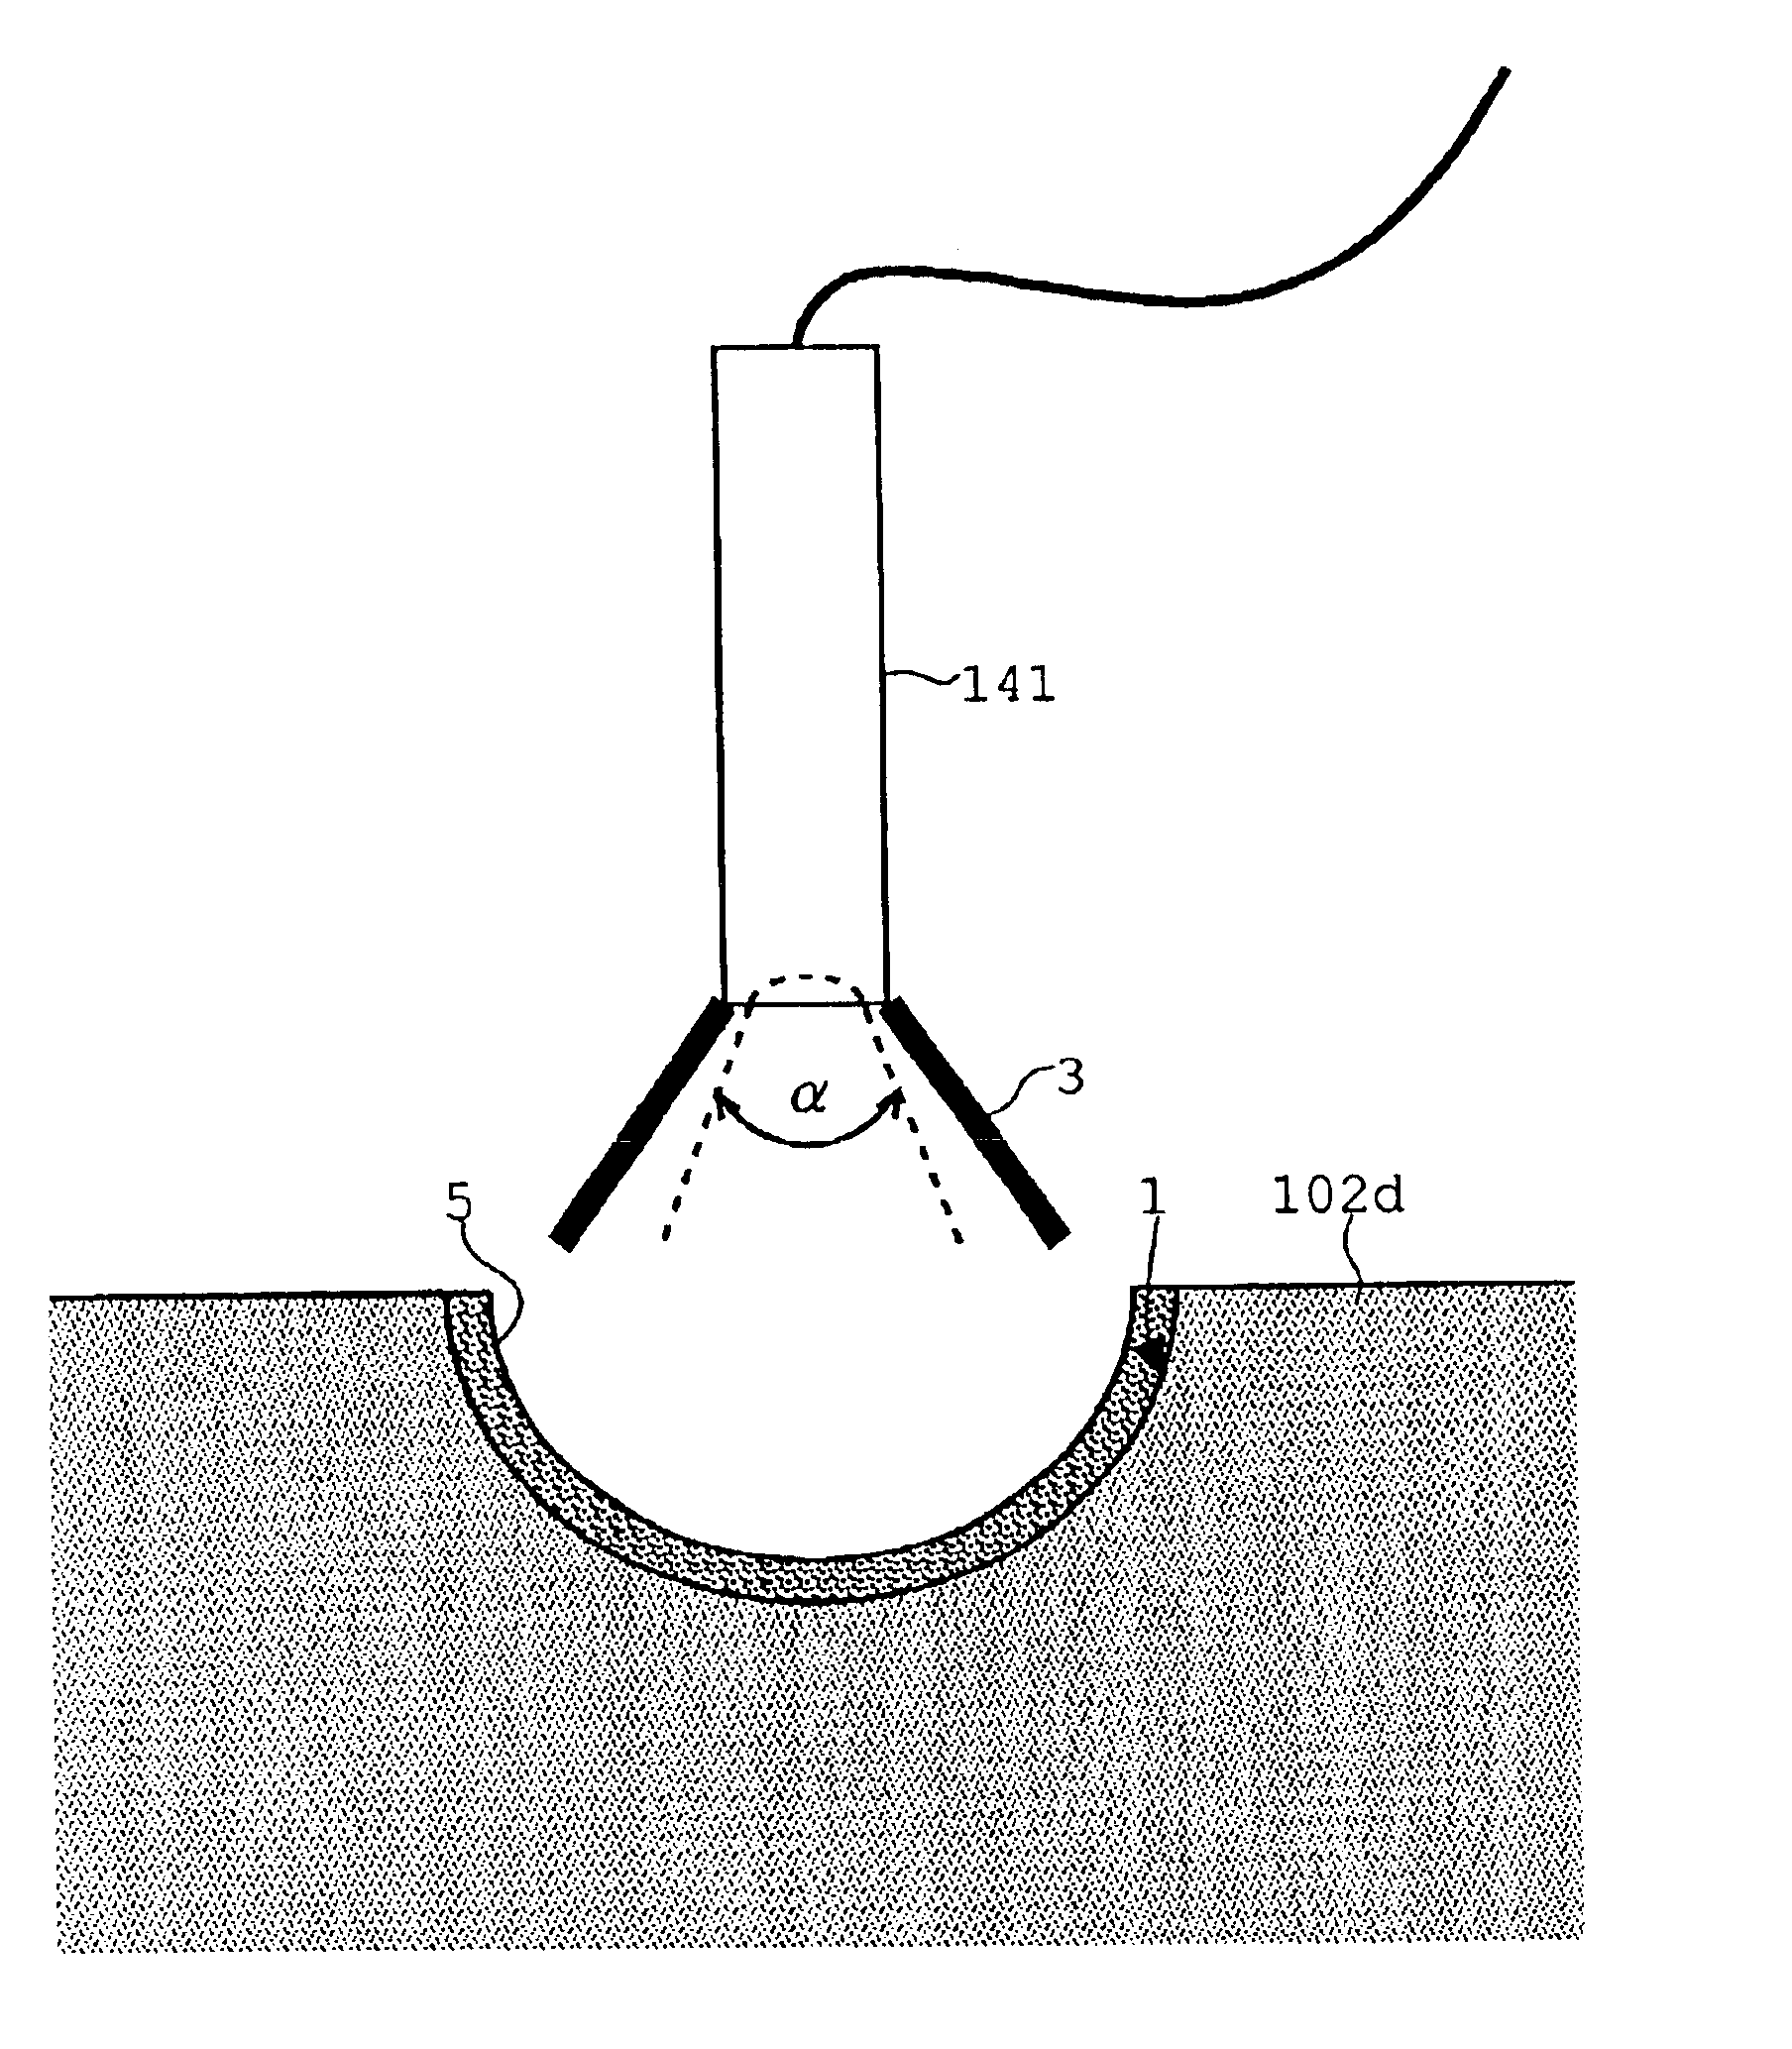 Turbo-molecular pump having radiation temperature apparatus